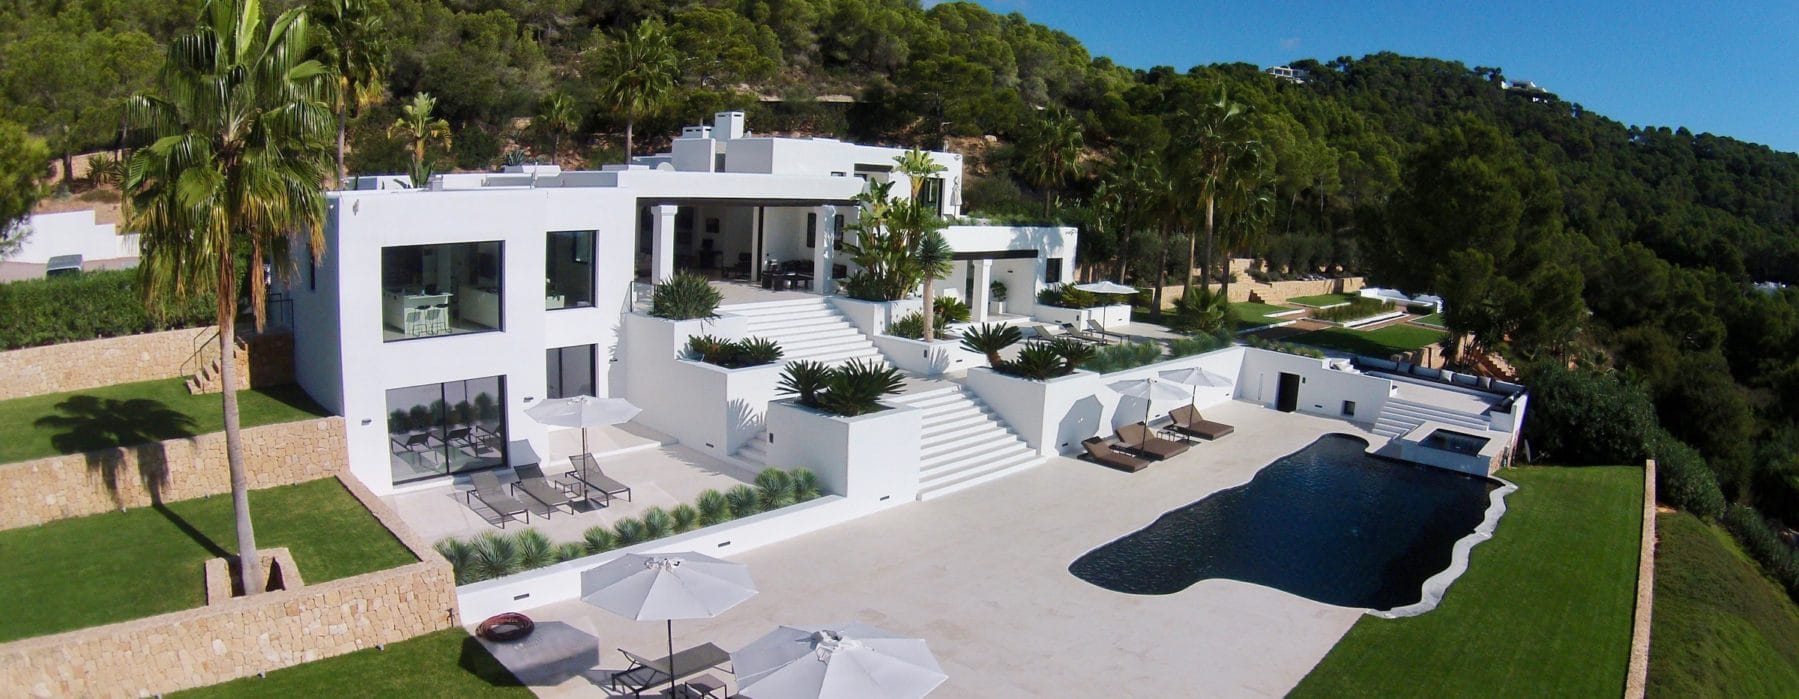 6 Bedroom Villa near Ibiza Town  to rent